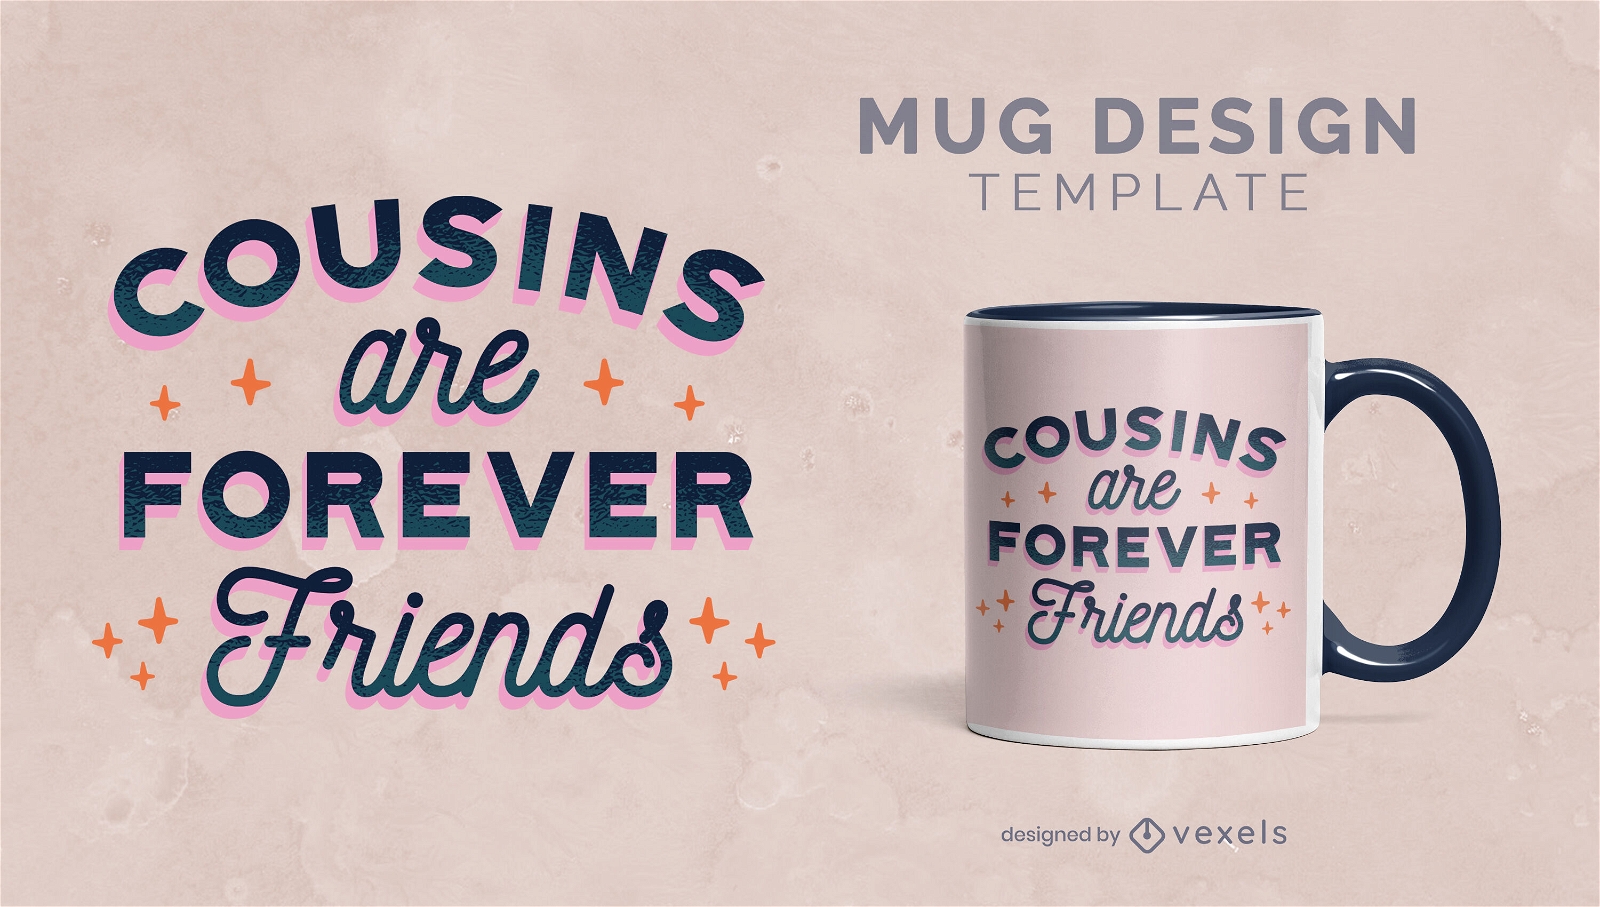 Cousins are forever friends mug design